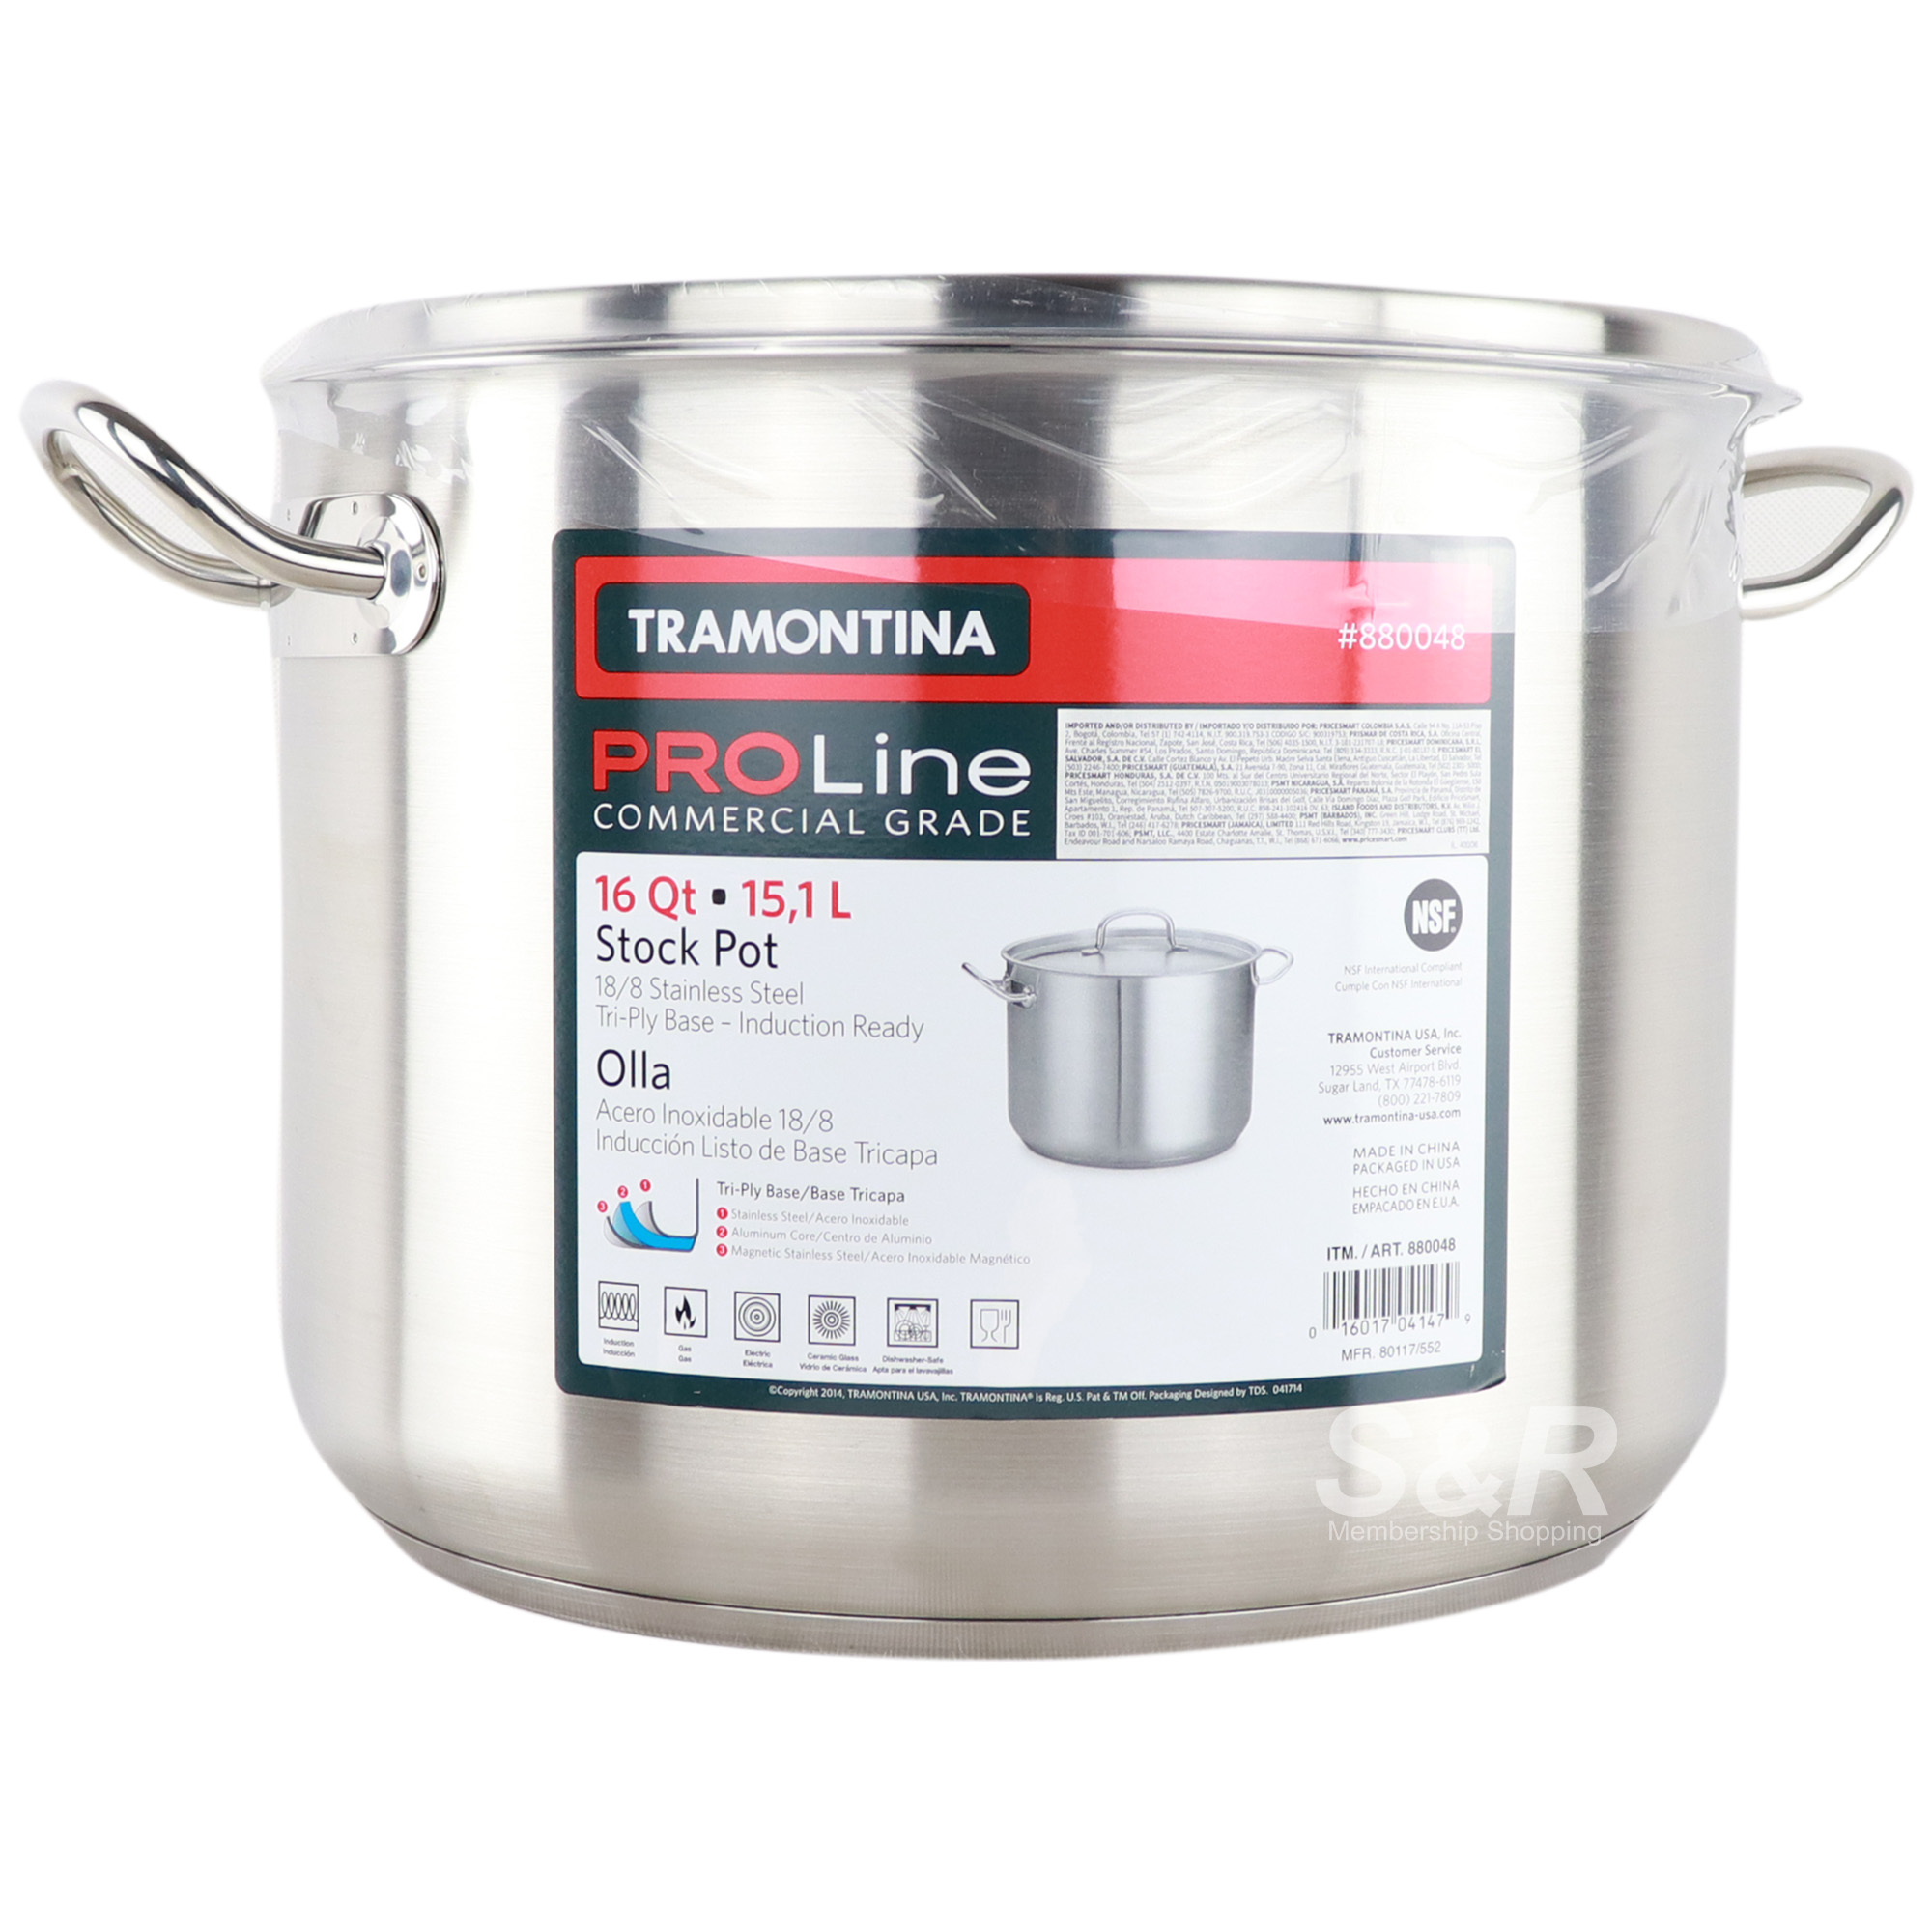 Tramontina ProLine Covered Stock Pot 15.1L